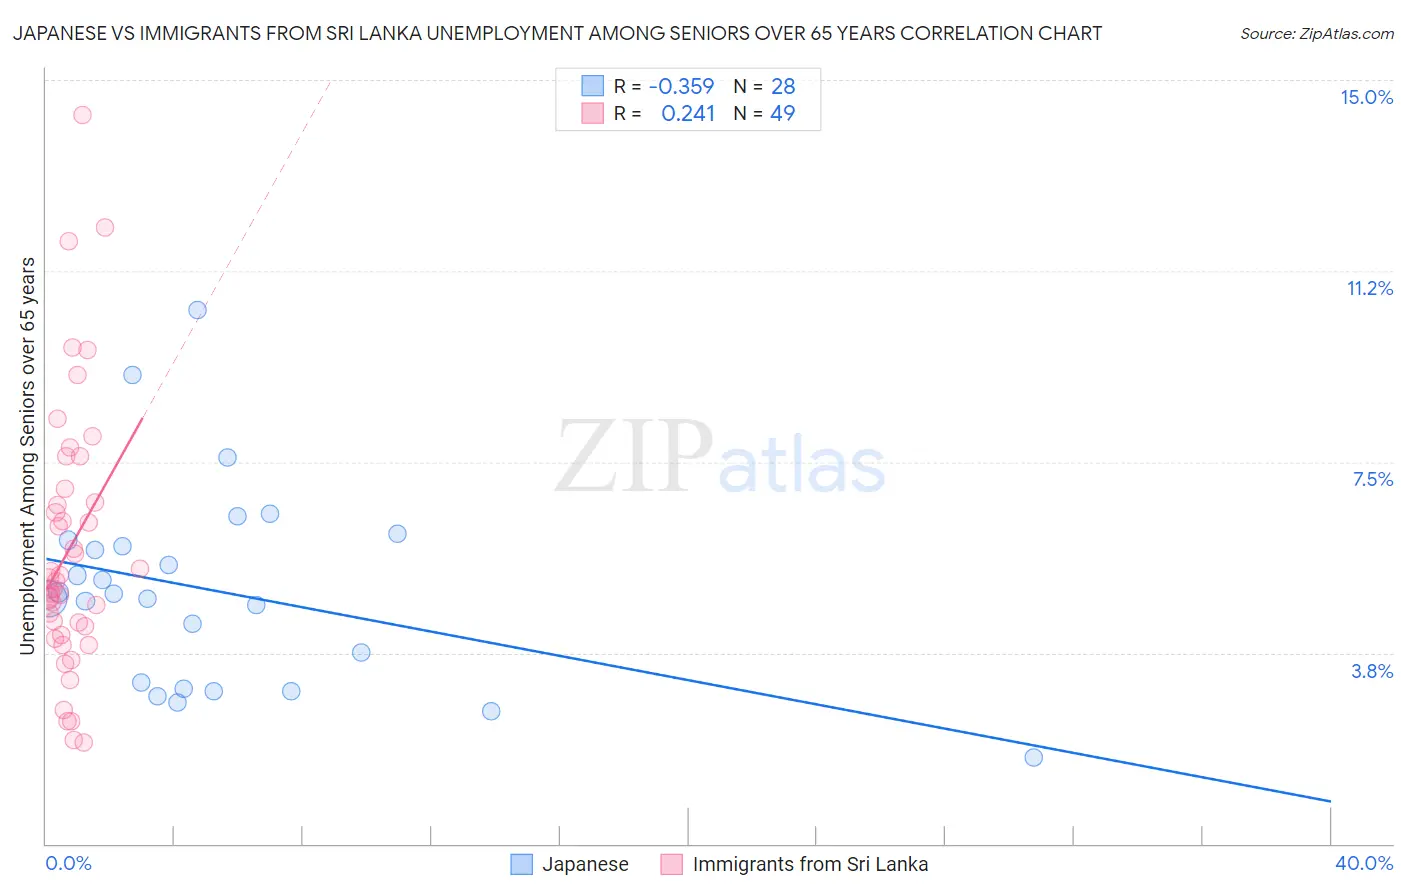 Japanese vs Immigrants from Sri Lanka Unemployment Among Seniors over 65 years